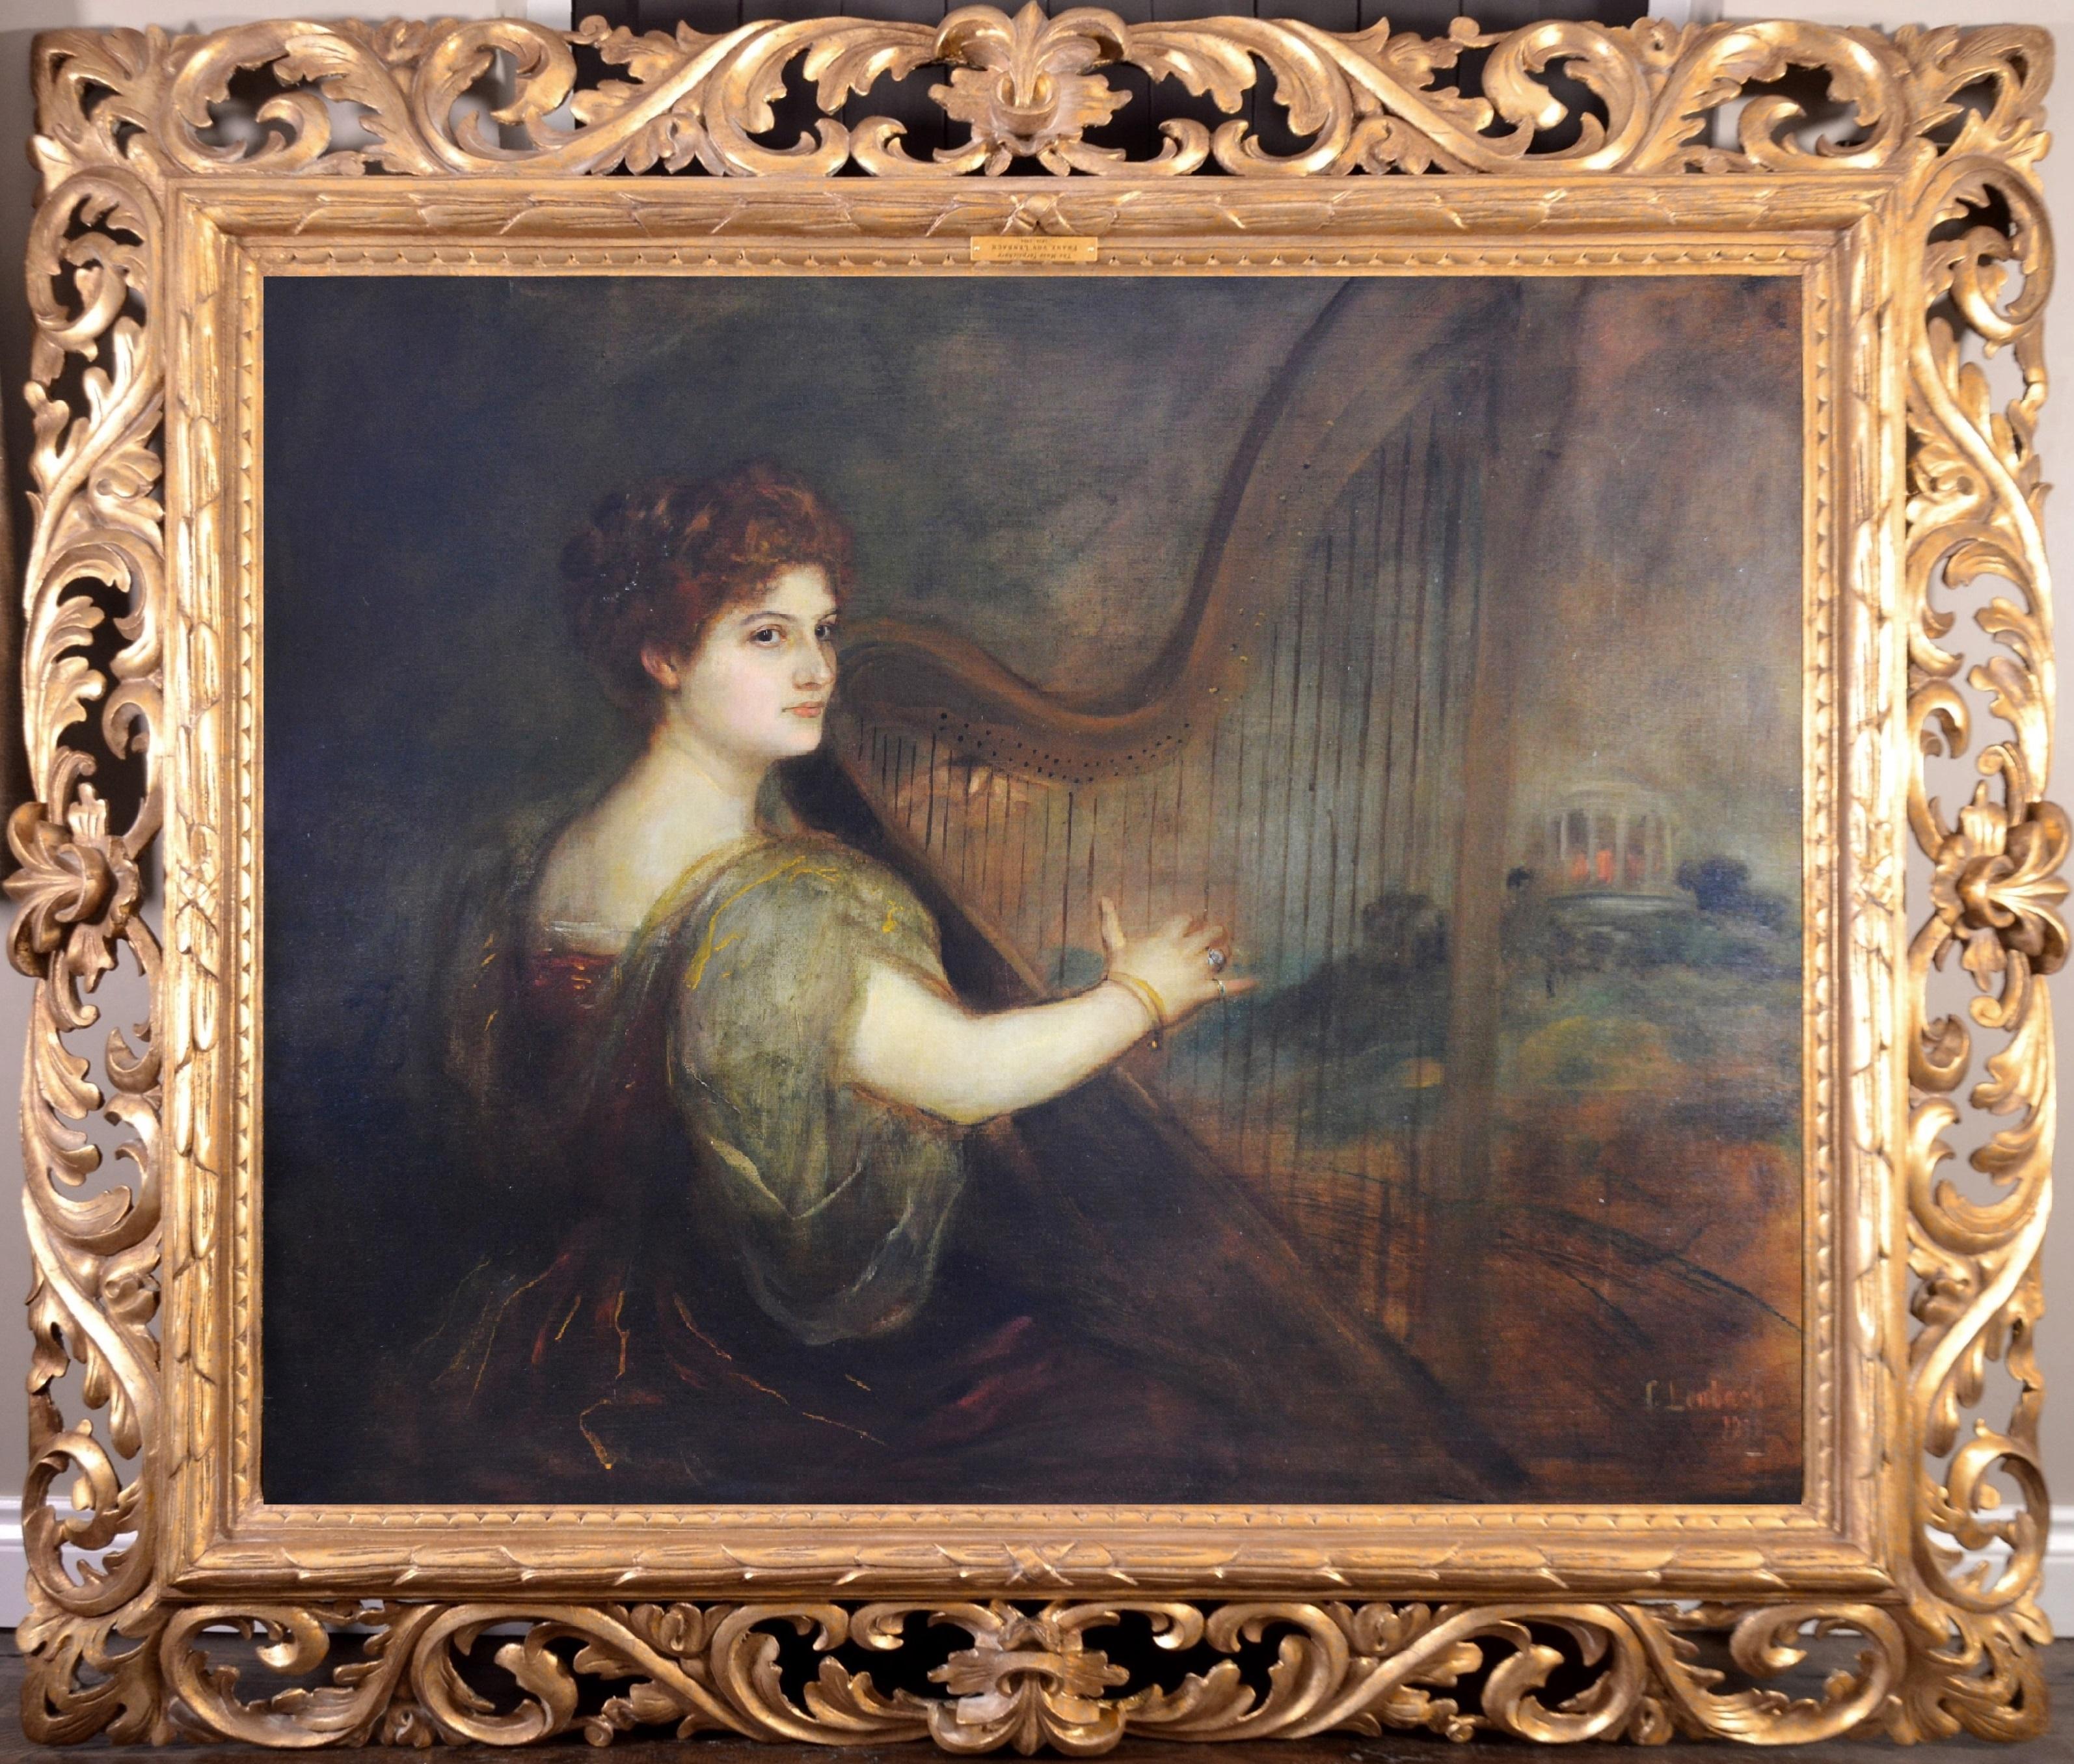 Franz von Lenbach  Portrait Painting - The Muse Terpsichore - Large 19th Century Portrait of the Ancient Greek Goddess 